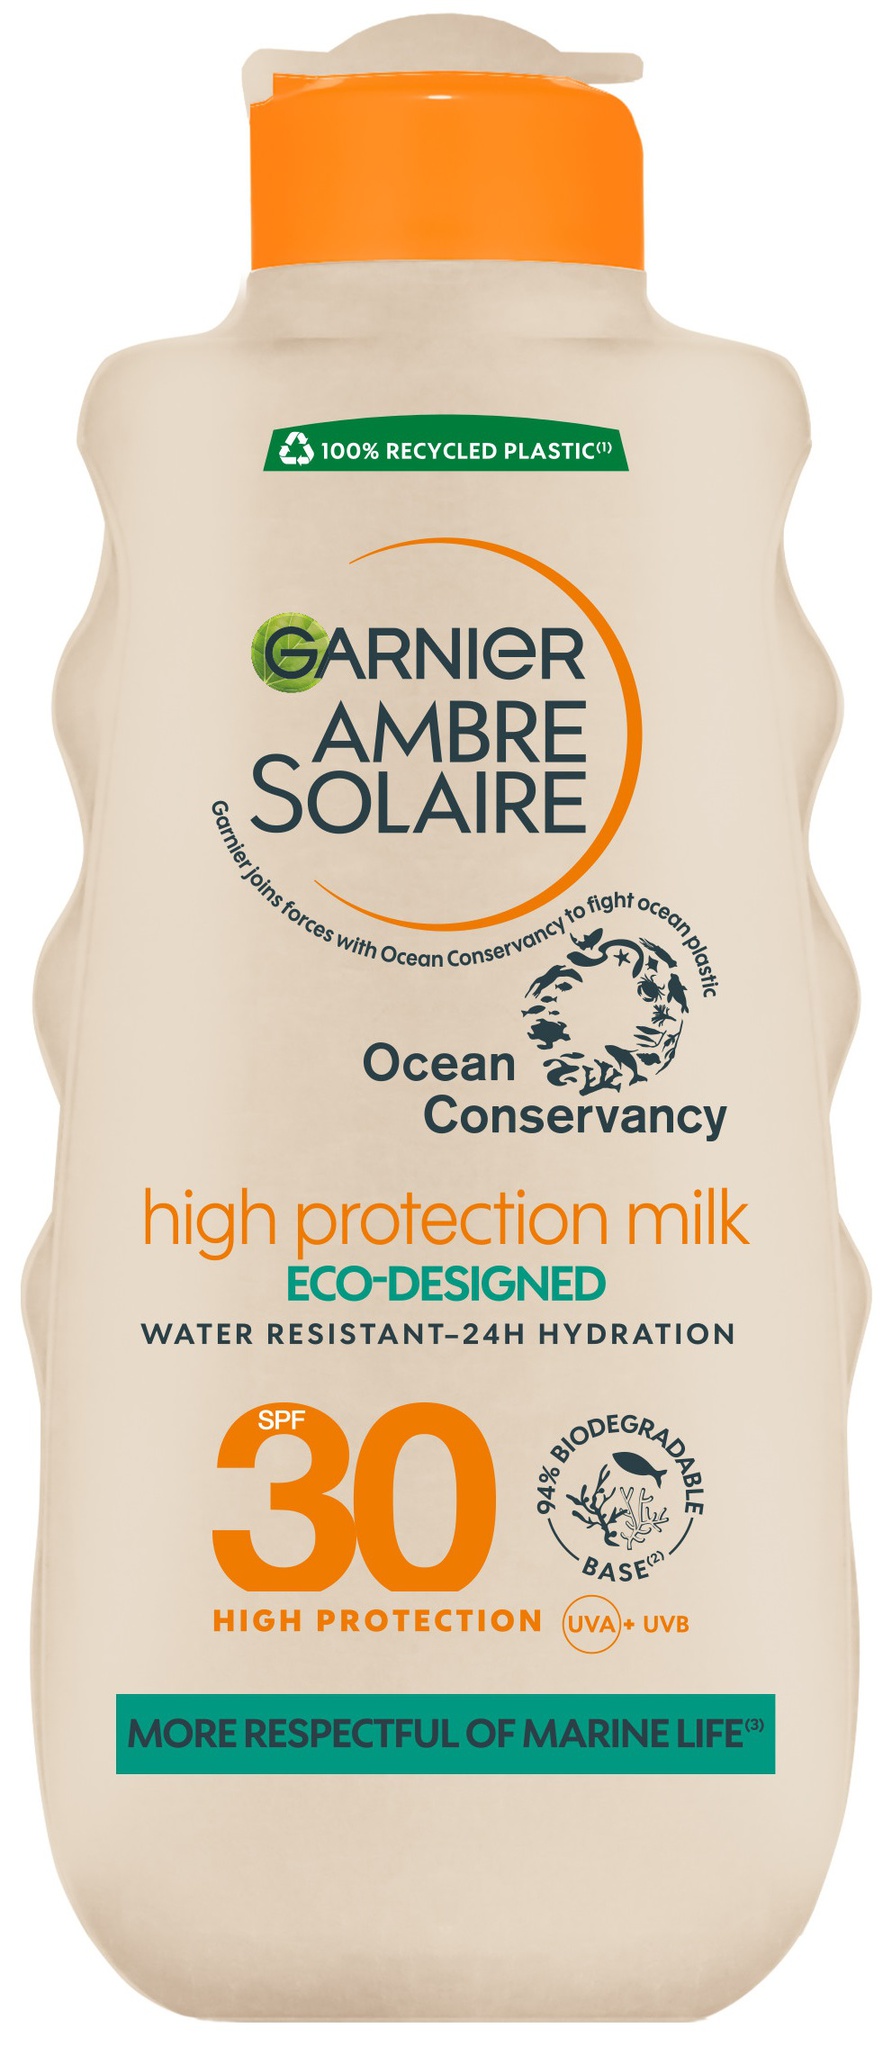 Garnier Ambre Solaire High Protection Milk SPF 30